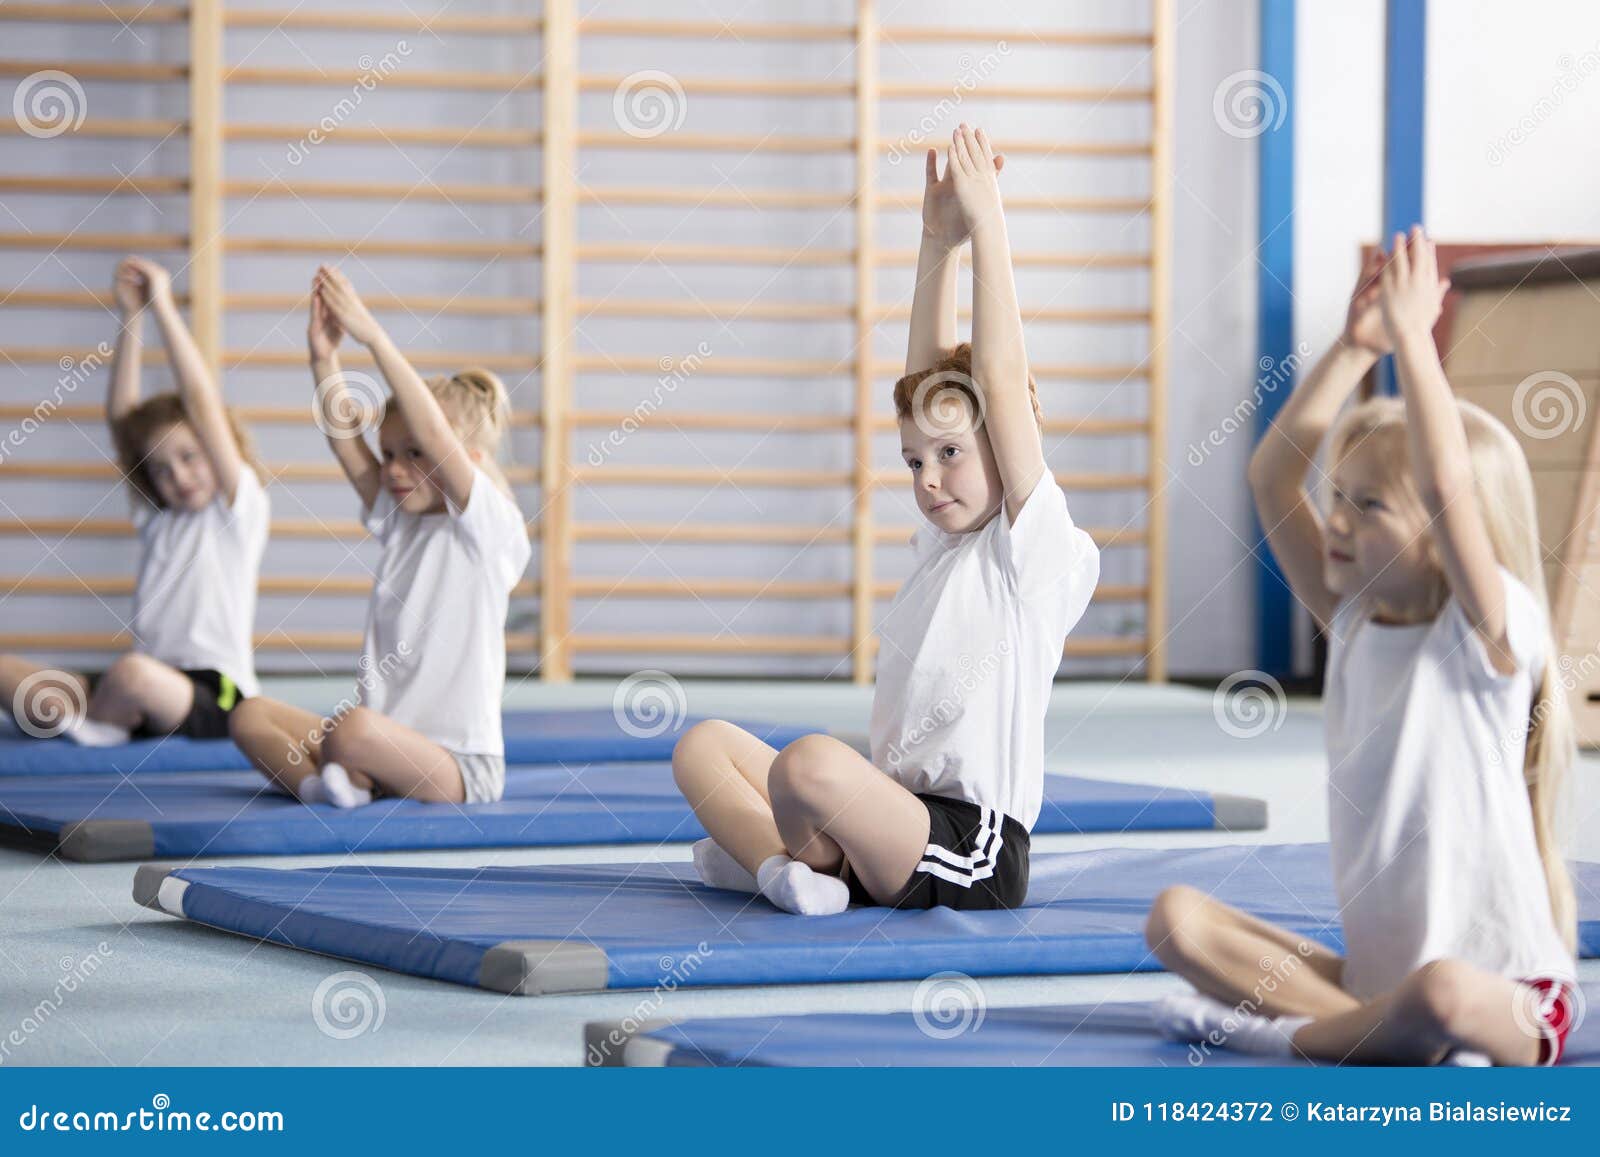 children sitting in yoga pose